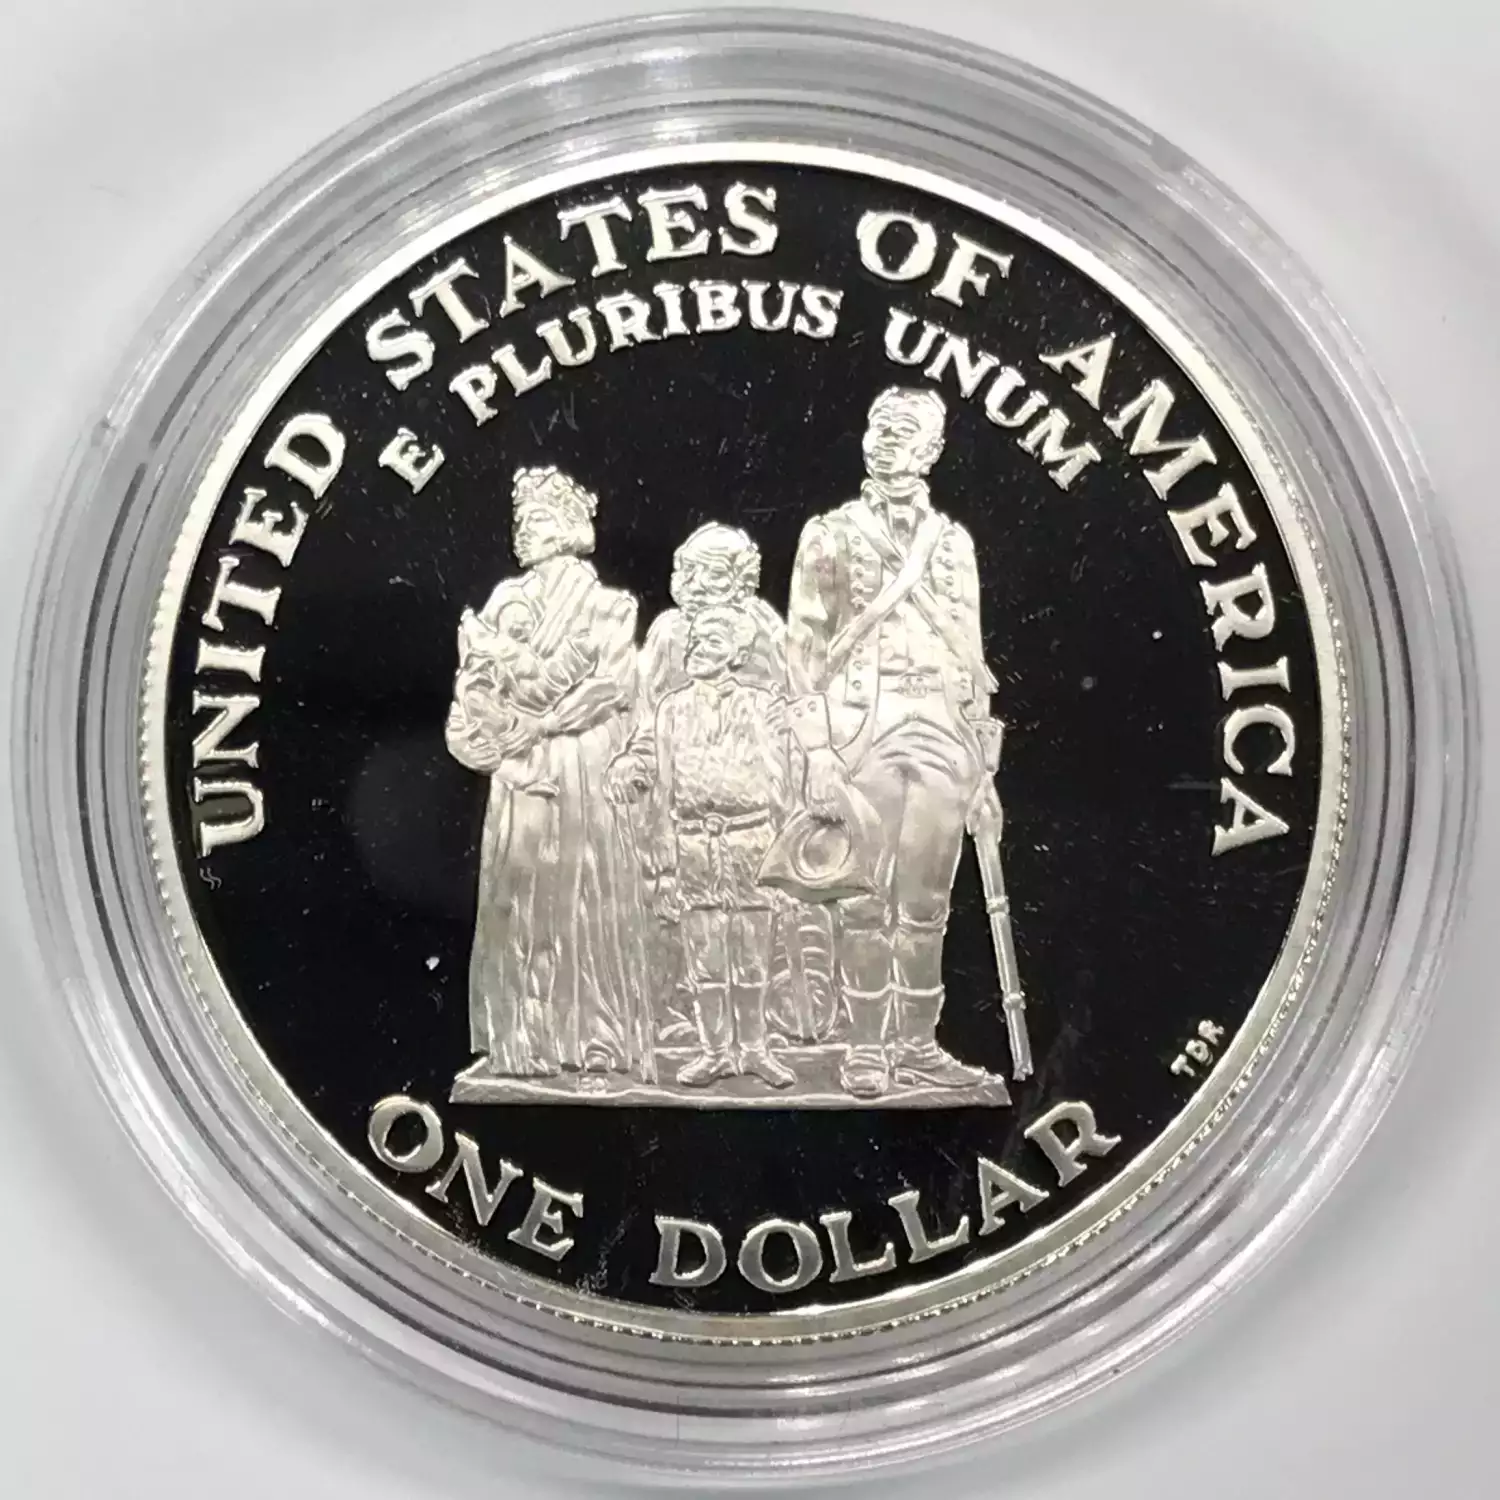 1998-S Black Revolutionary War Patriots Proof Silver Dollar w US Mint Box & COA